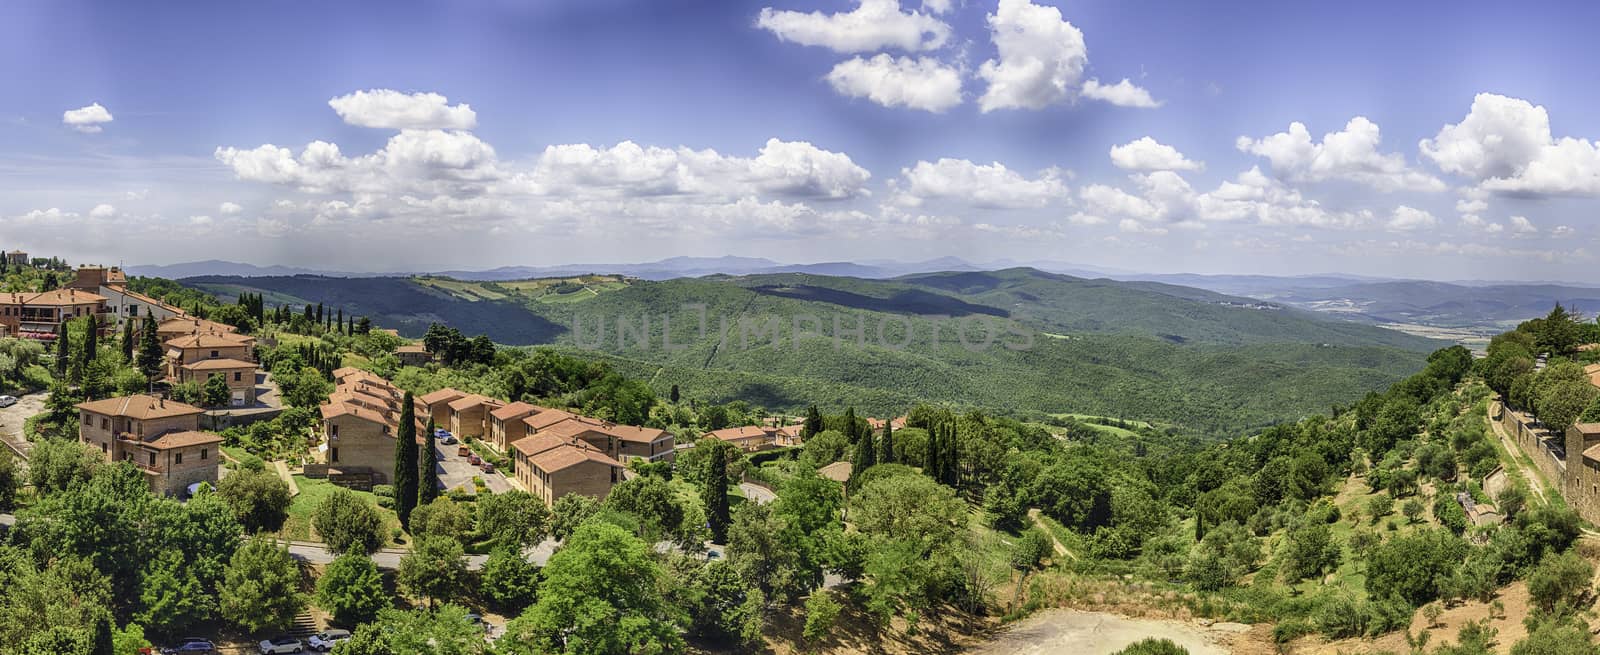 Panoramic view of a beautiful landscape around Montalcino, Tusca by marcorubino